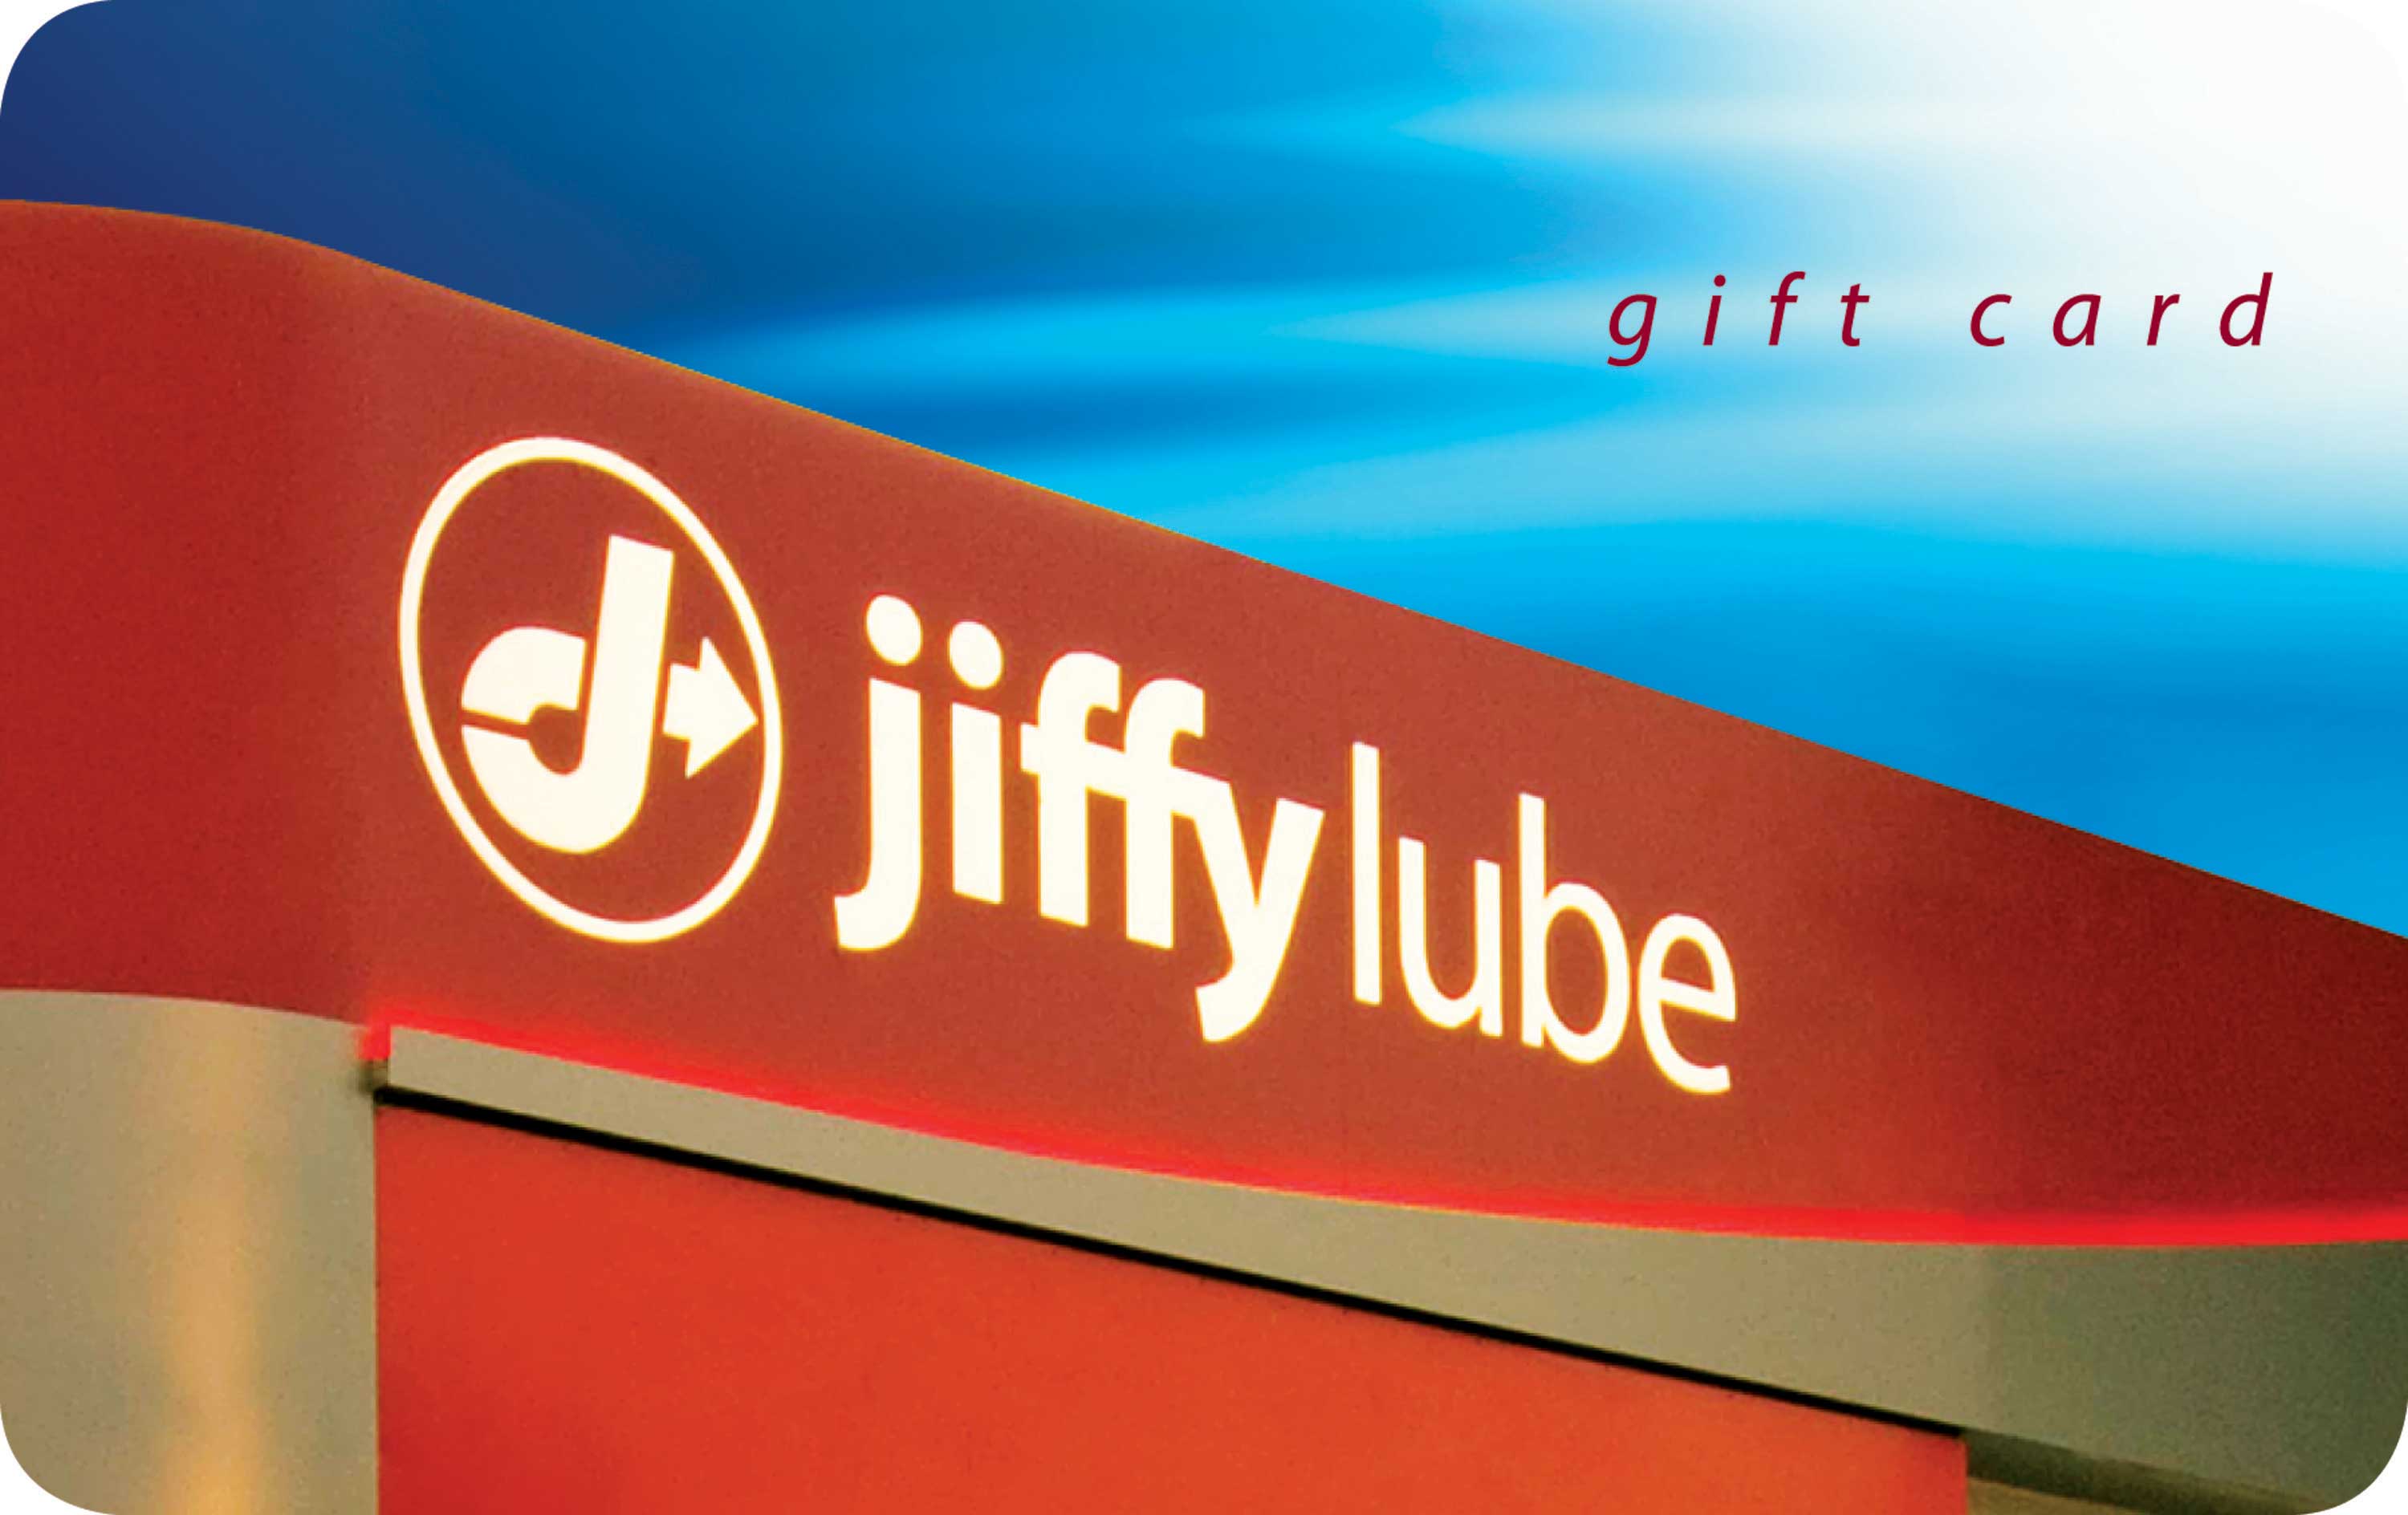 Jiffy Lube gift card